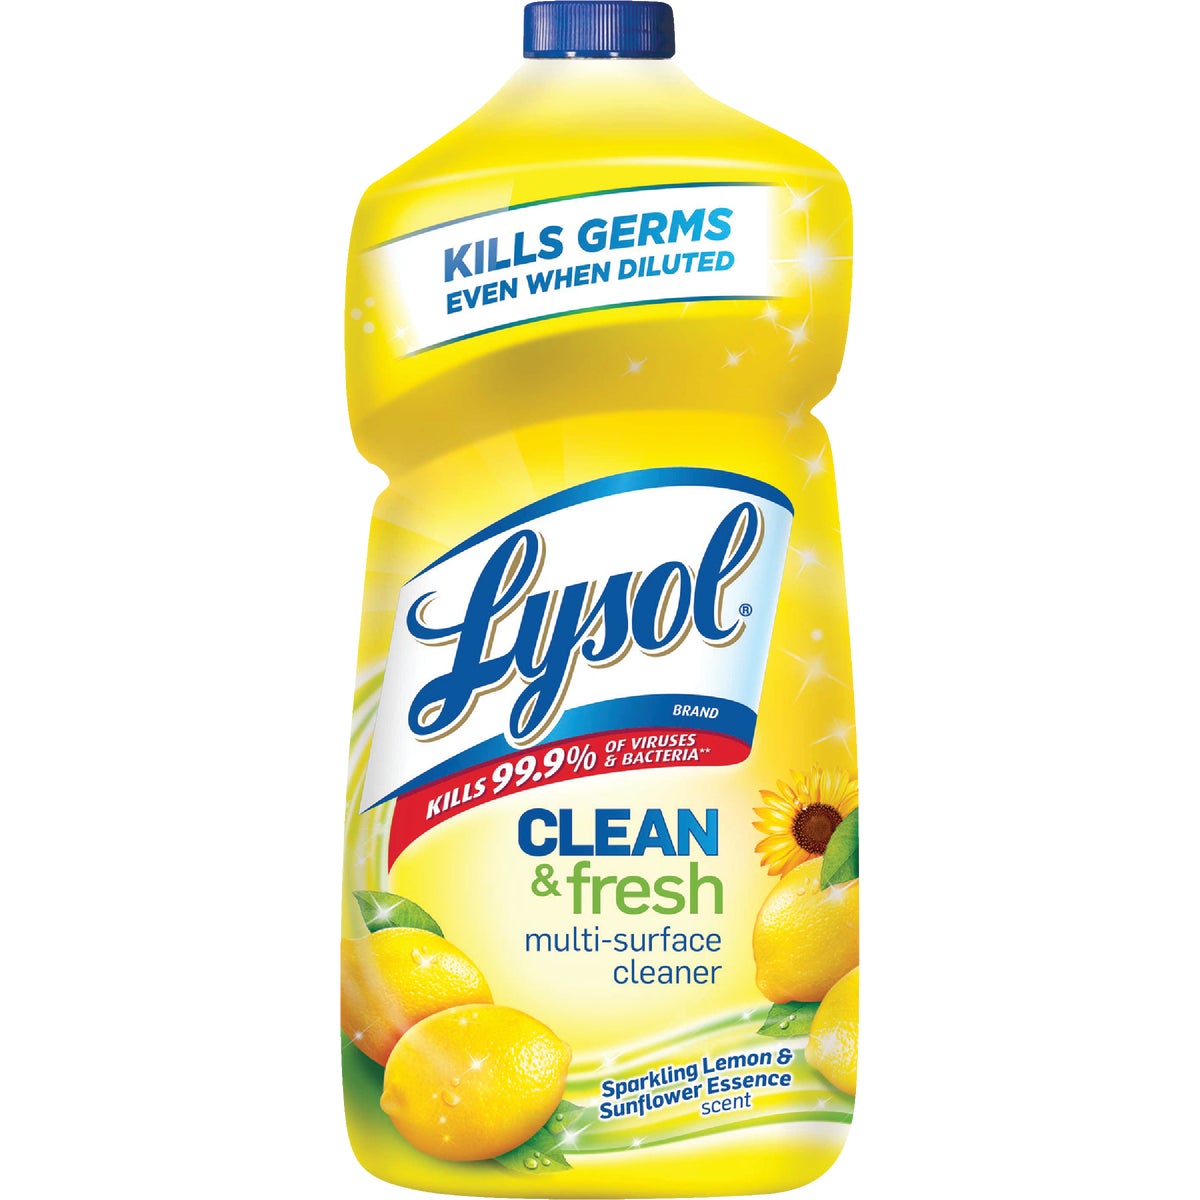 Lysol 40 Oz. Lemon & Sunflower Essence Clean & Fresh Multi-Surface Cleaner